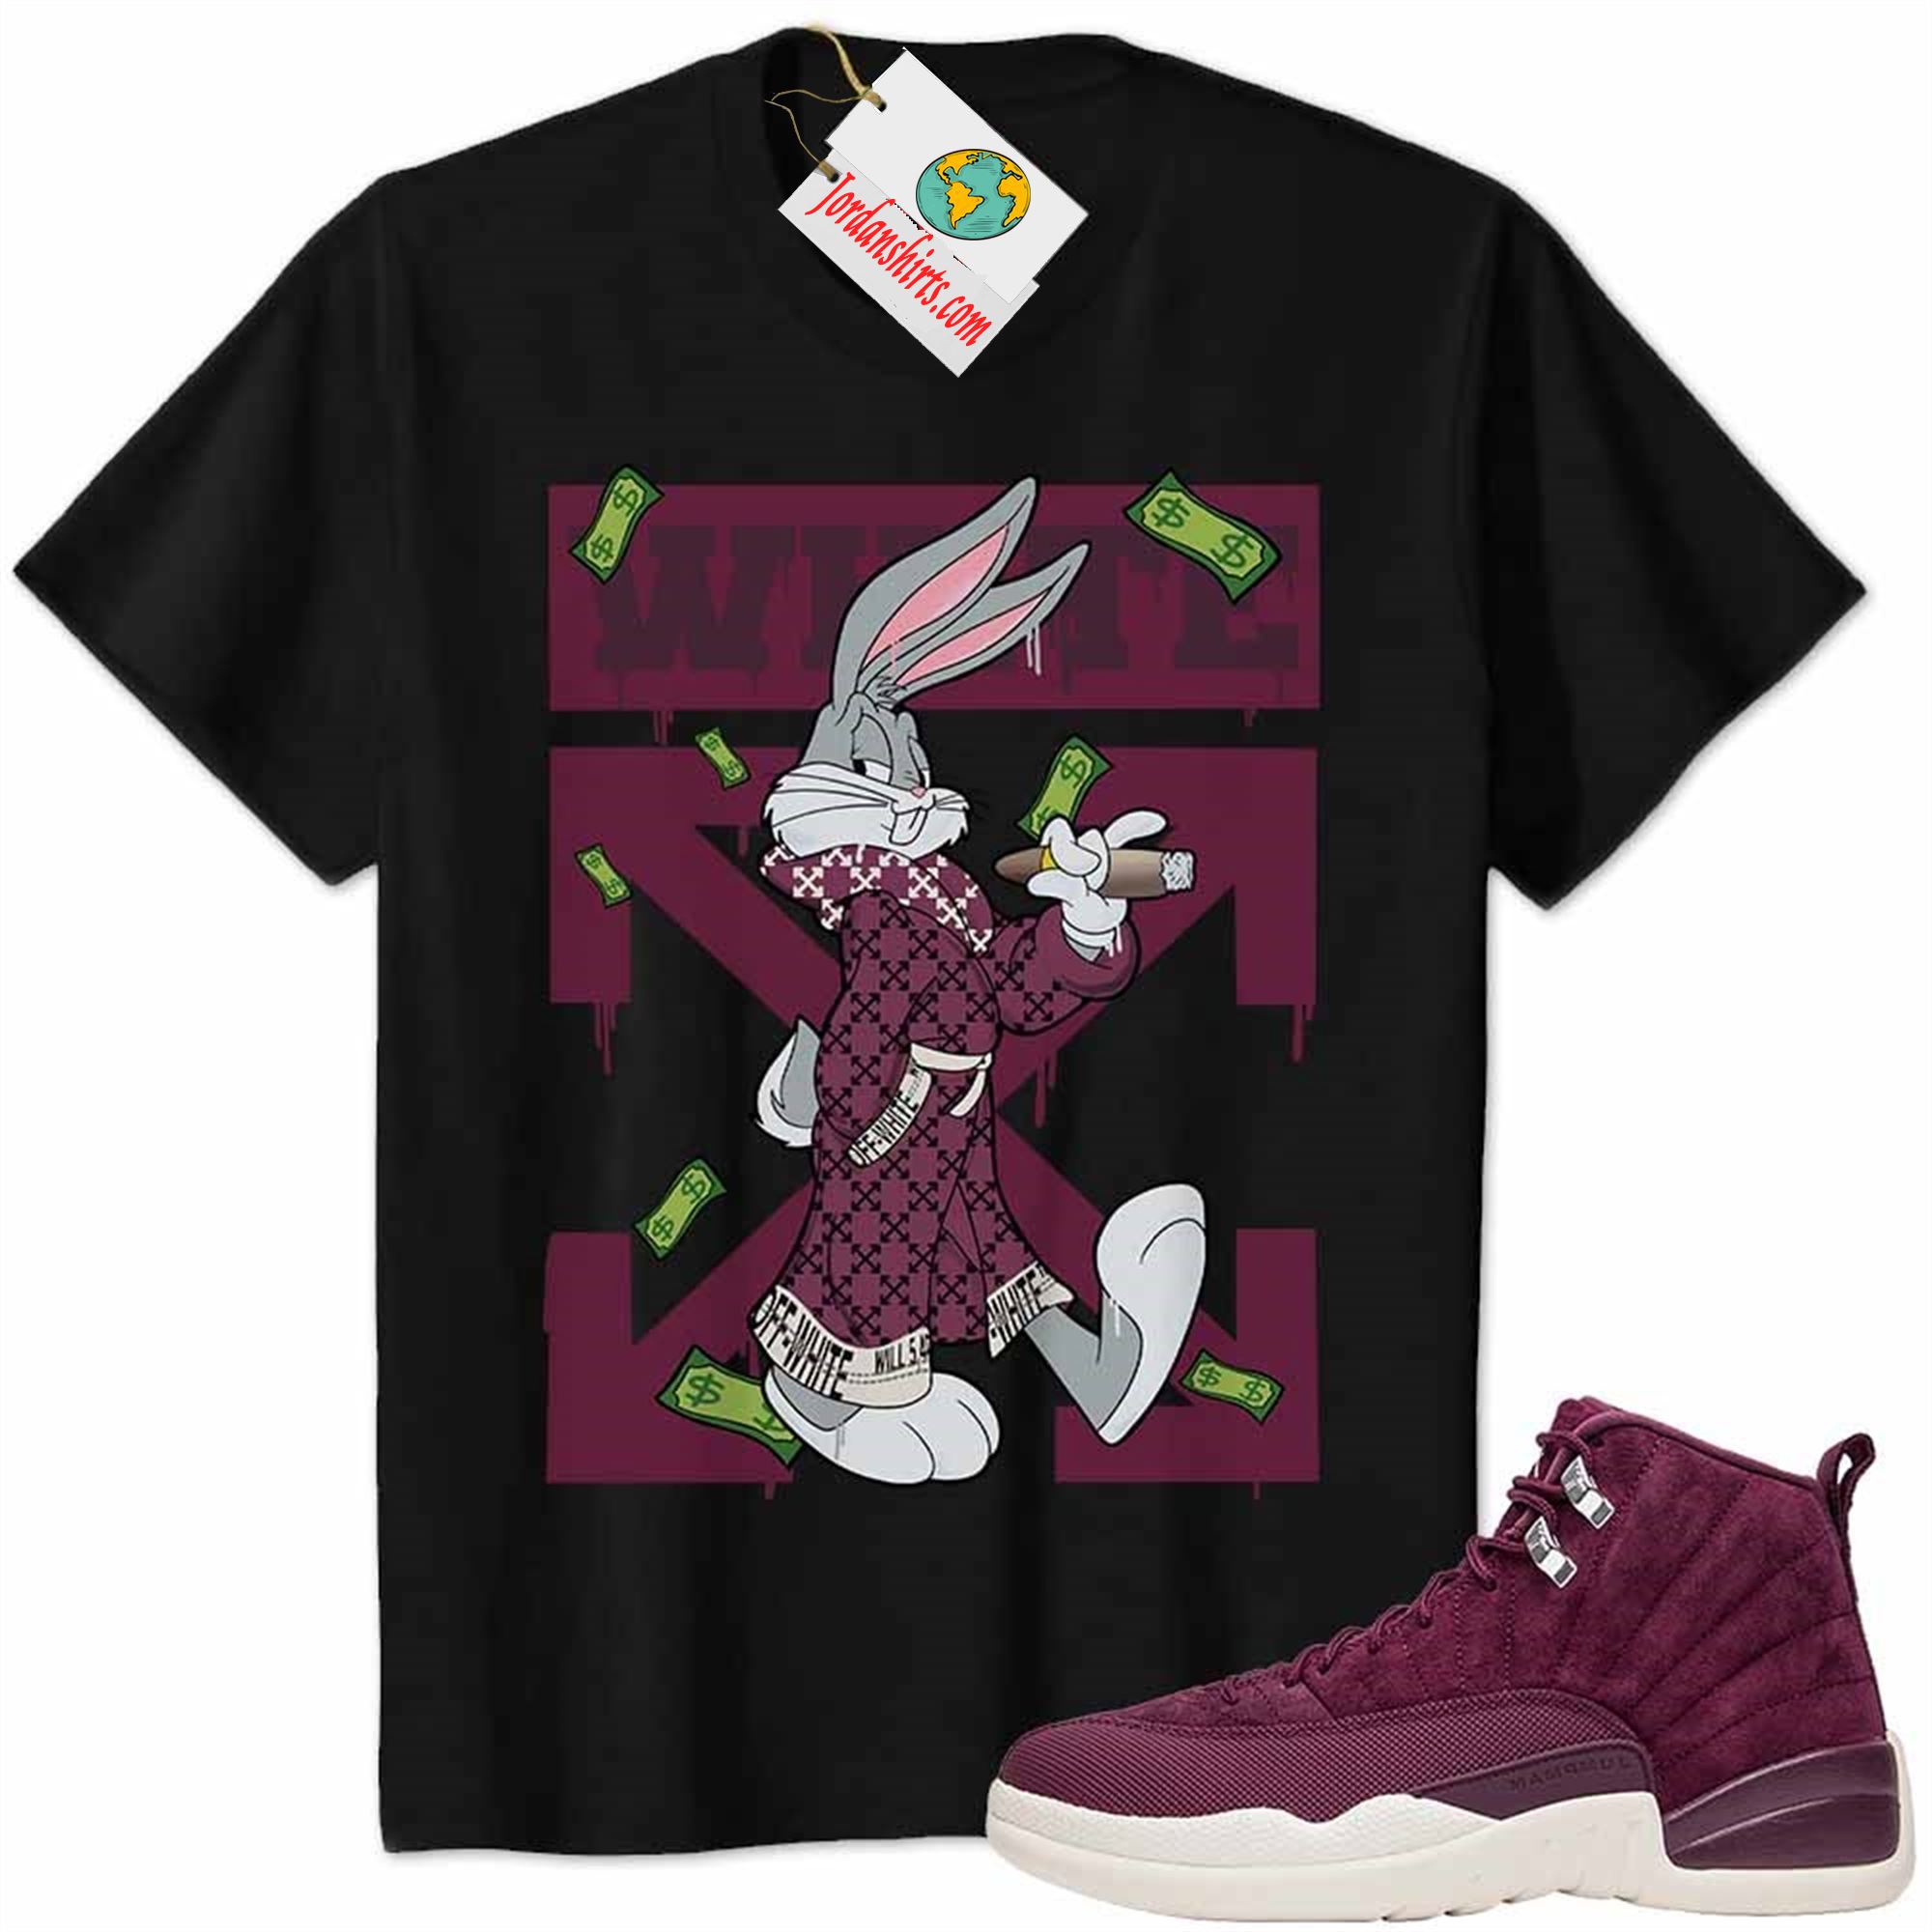 Jordan 12 Shirt, Jordan 12 Bordeaux Shirt Bug Bunny Smokes Weed Money Falling Black Size Up To 5xl